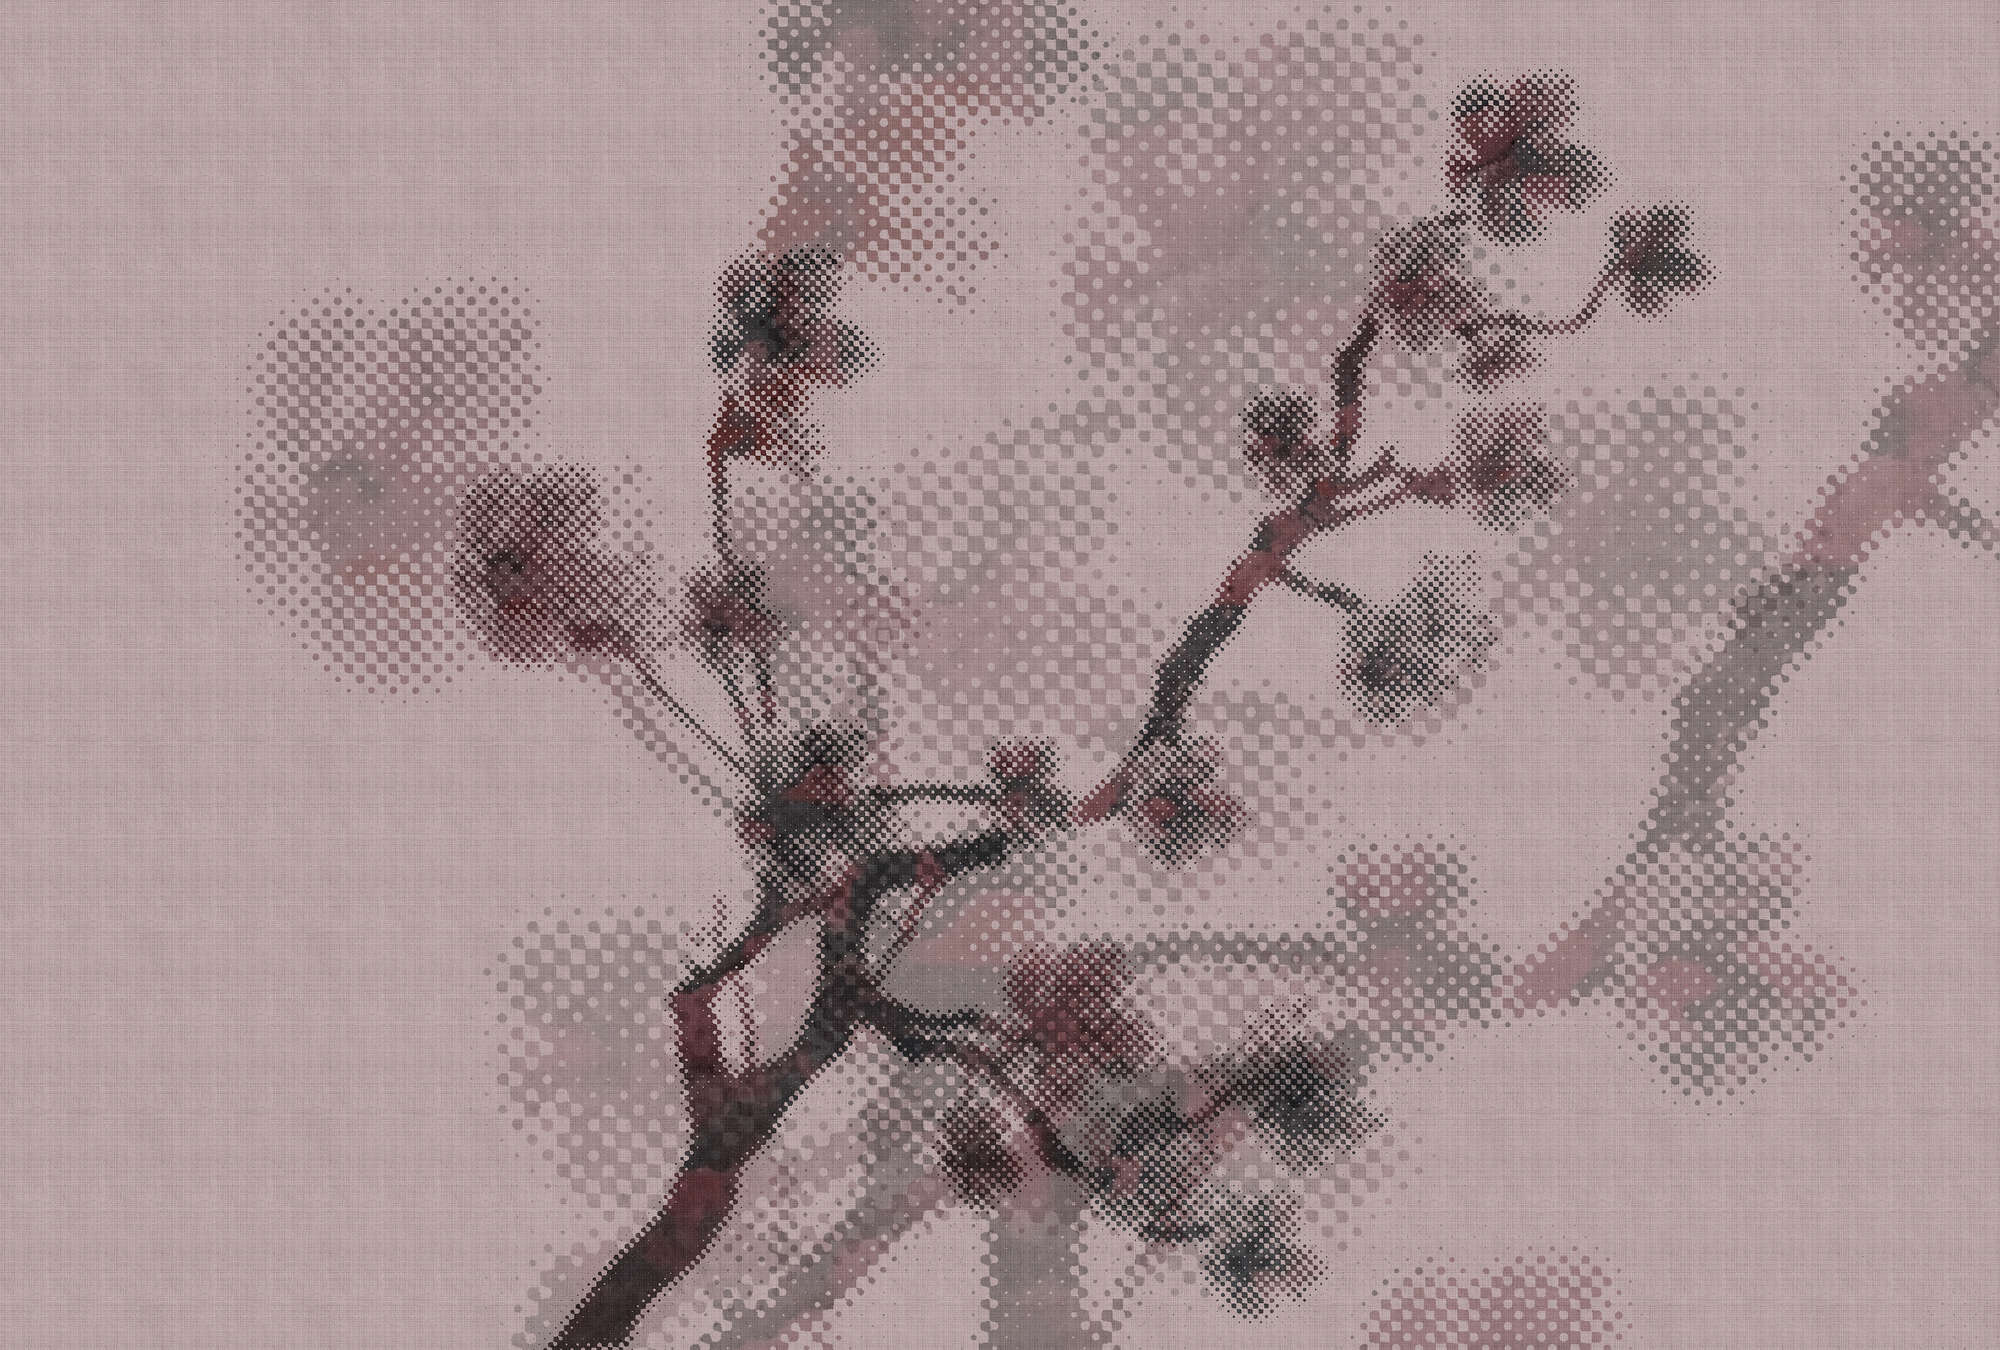             Twigs 3 - Papier peint motif nature & pixel design - texture lin naturel - rose | texture intissé
        